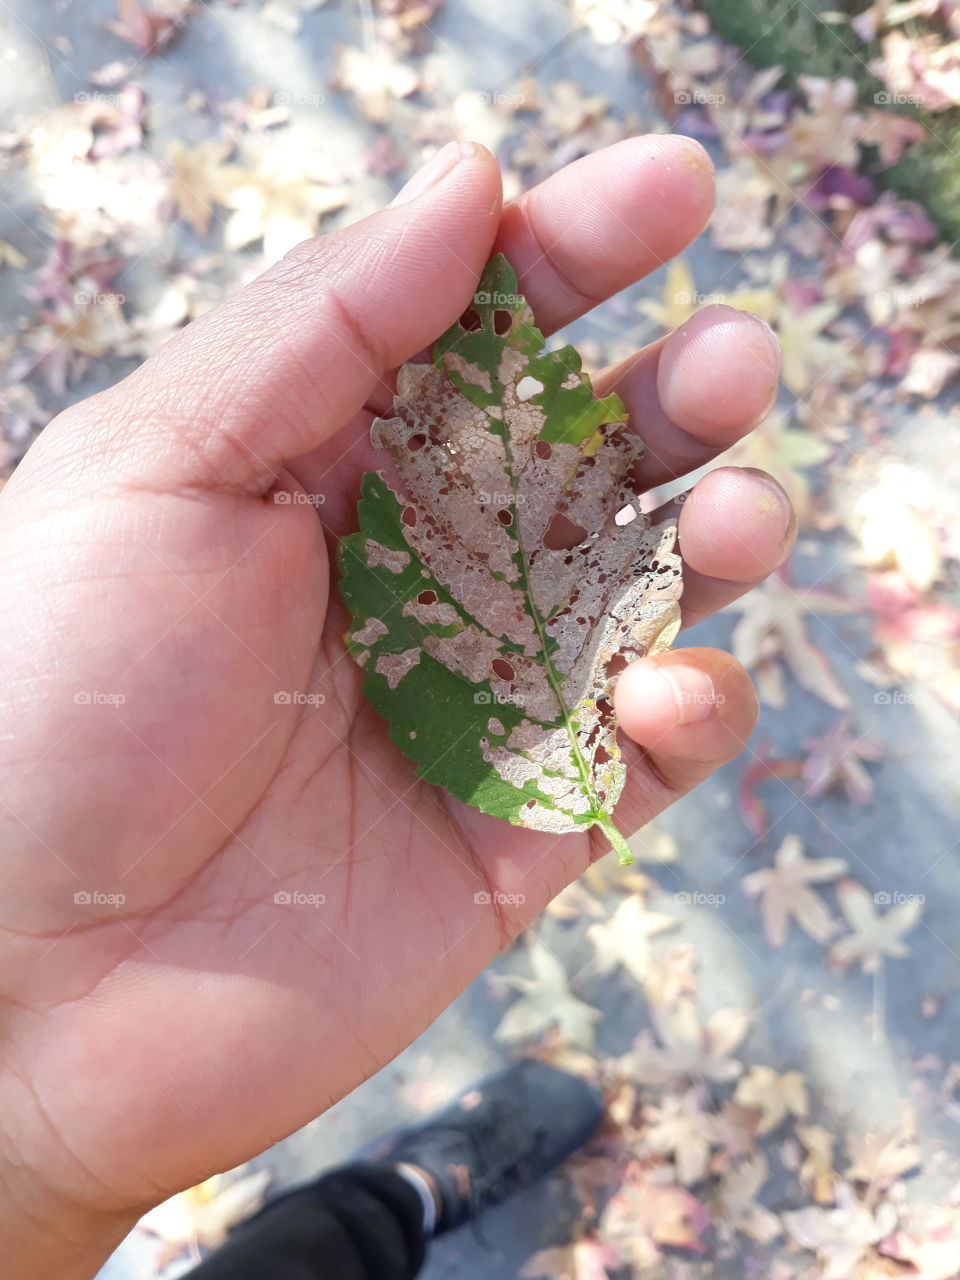 leaf on my hand